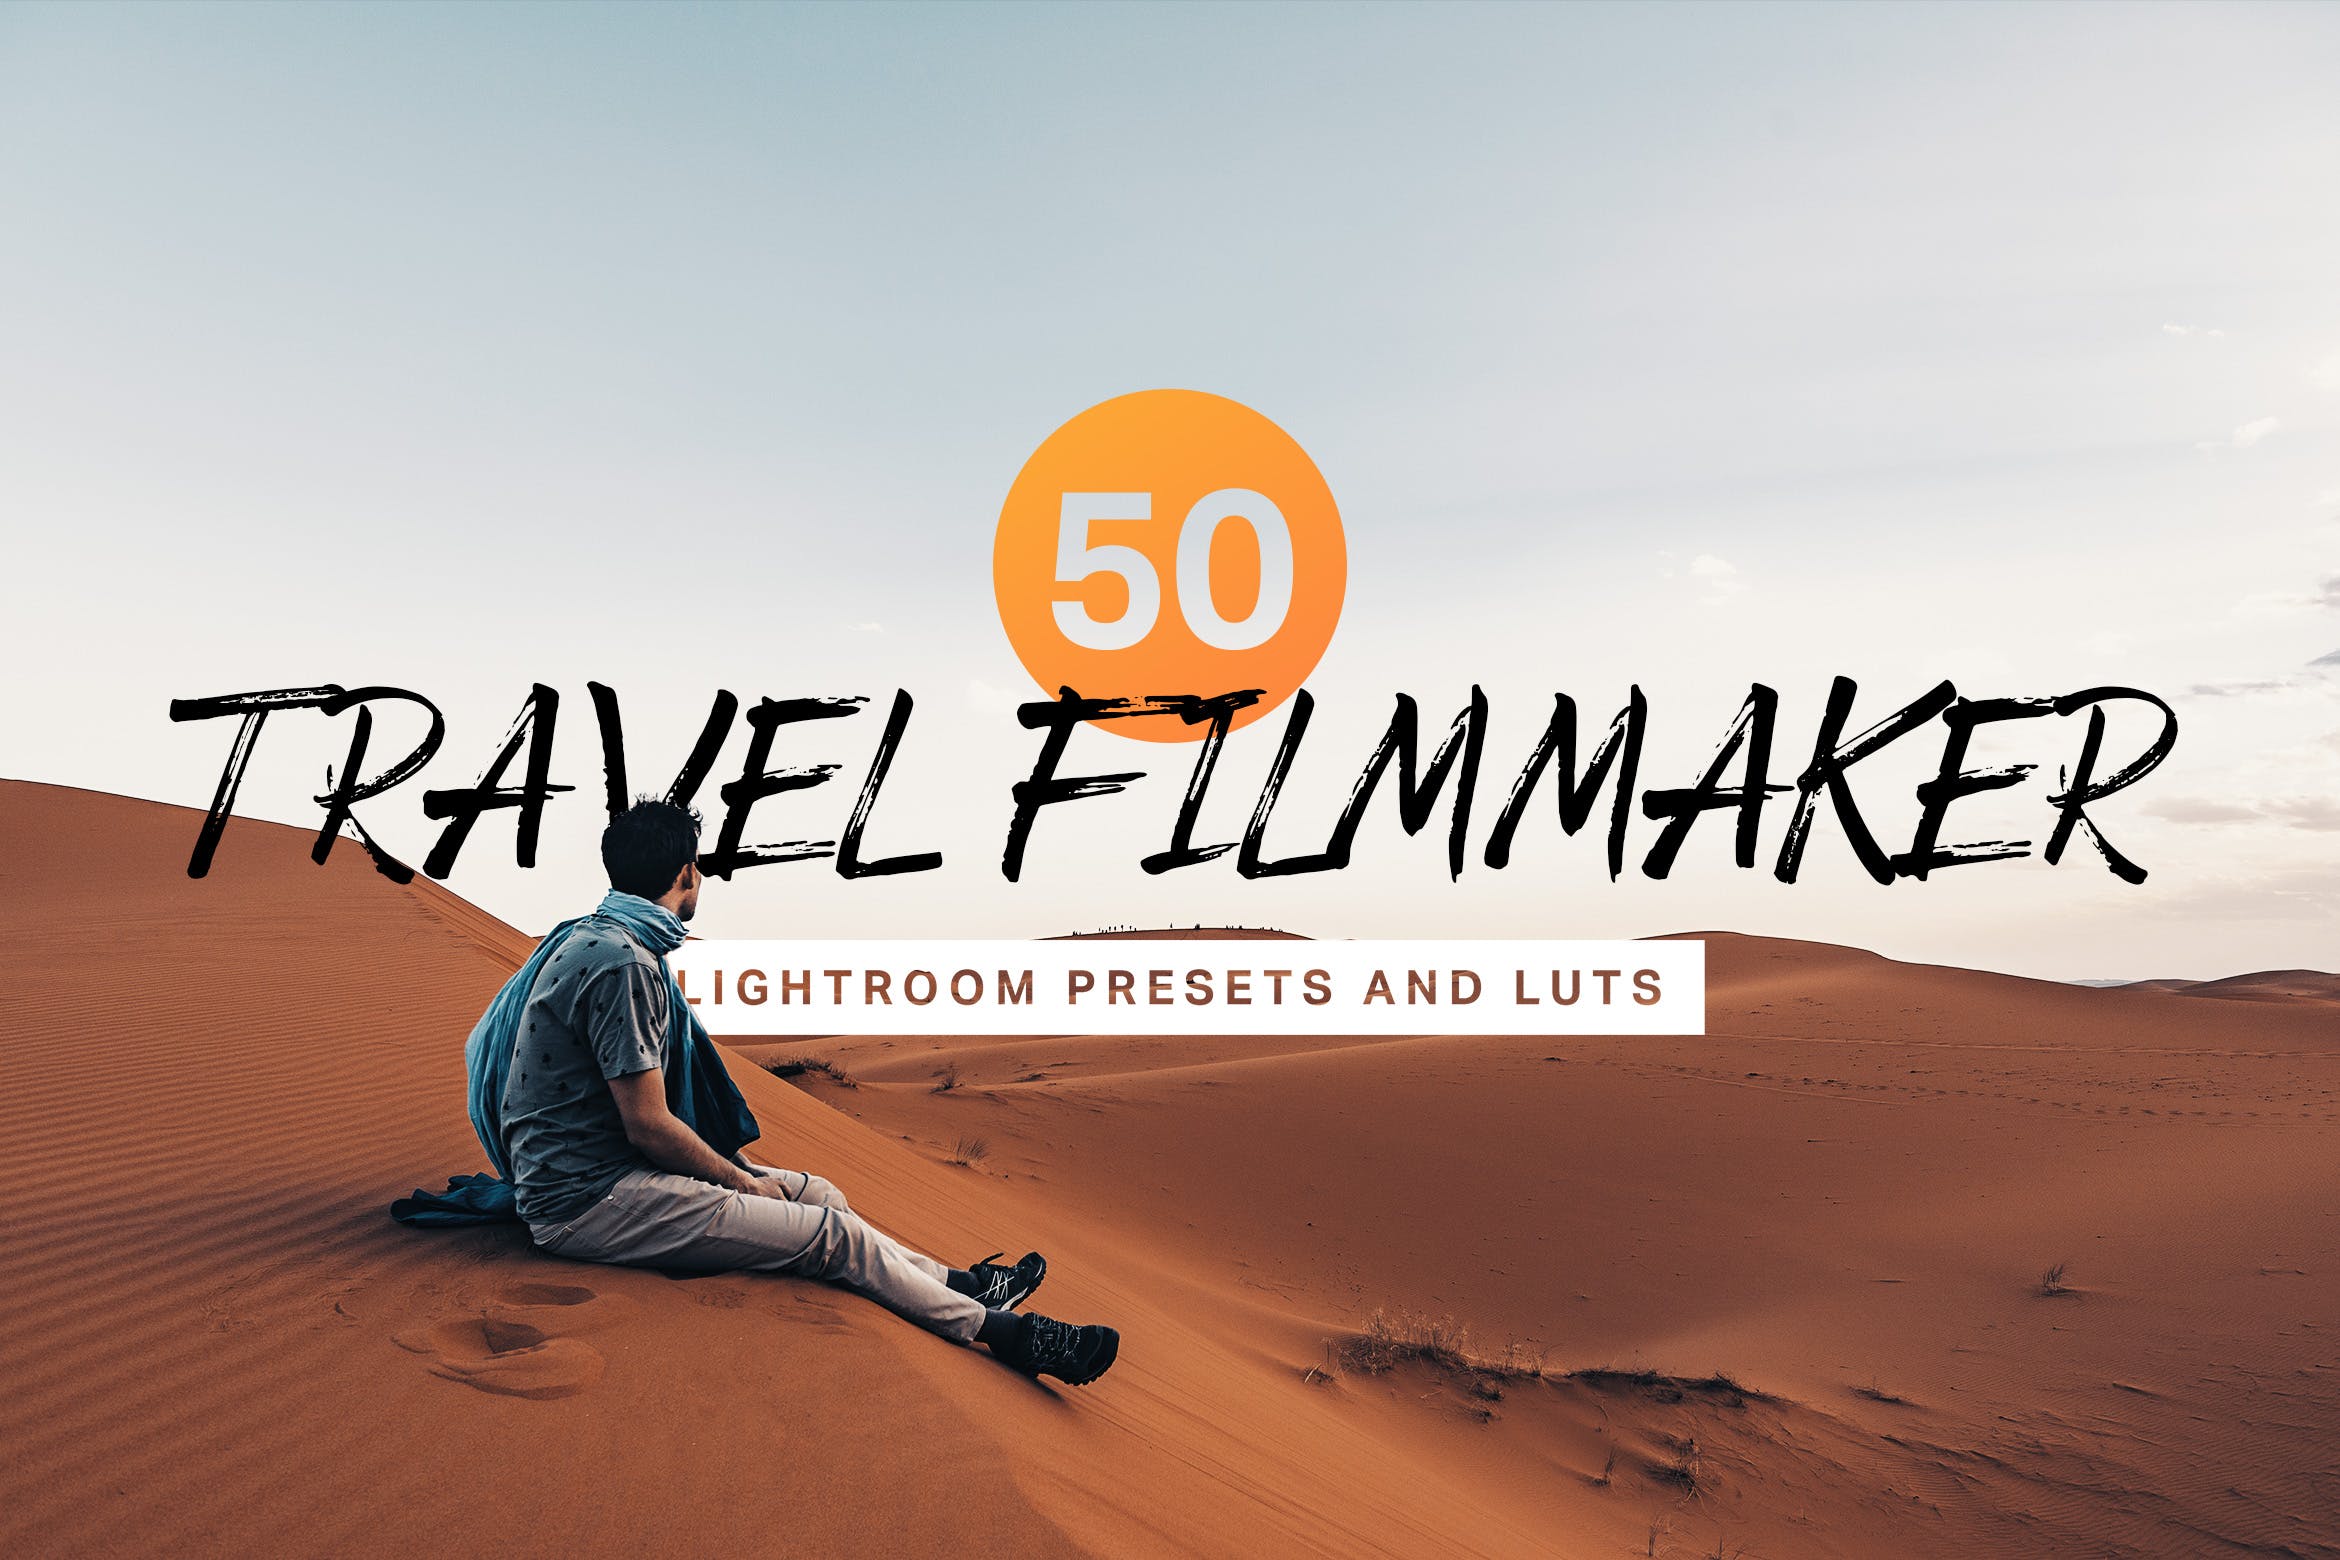 50款旅行照片电影色调滤镜16素材精选LR预设 50 Travel Filmmaker Lightroom Presets and LUTs插图